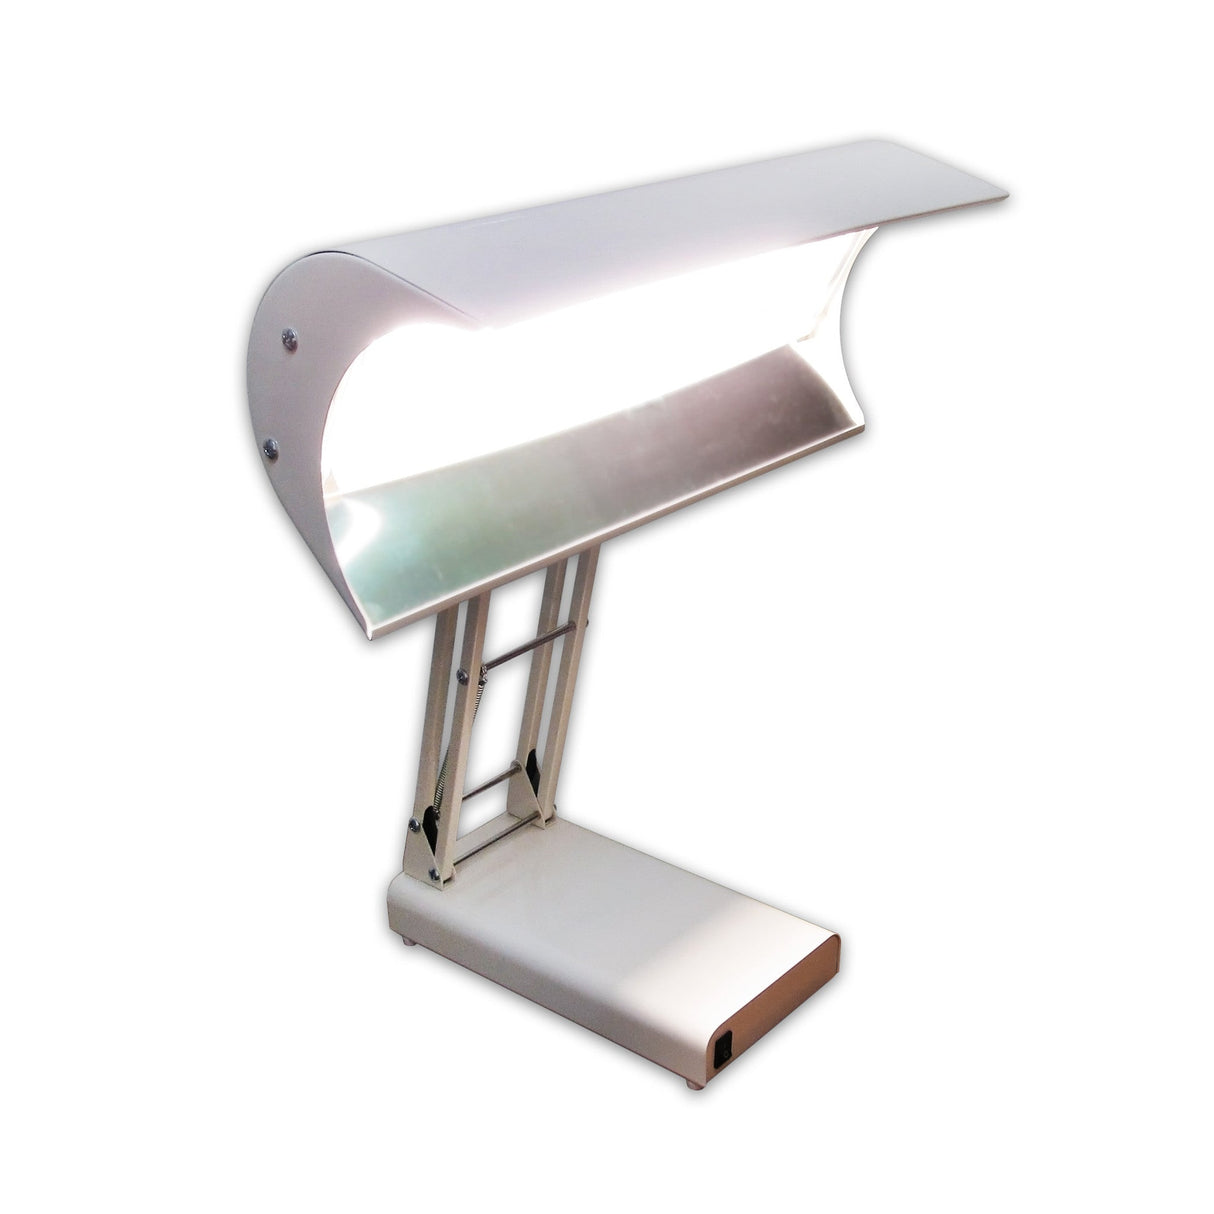 SADelite Light Therapy Lamp - Juicerville